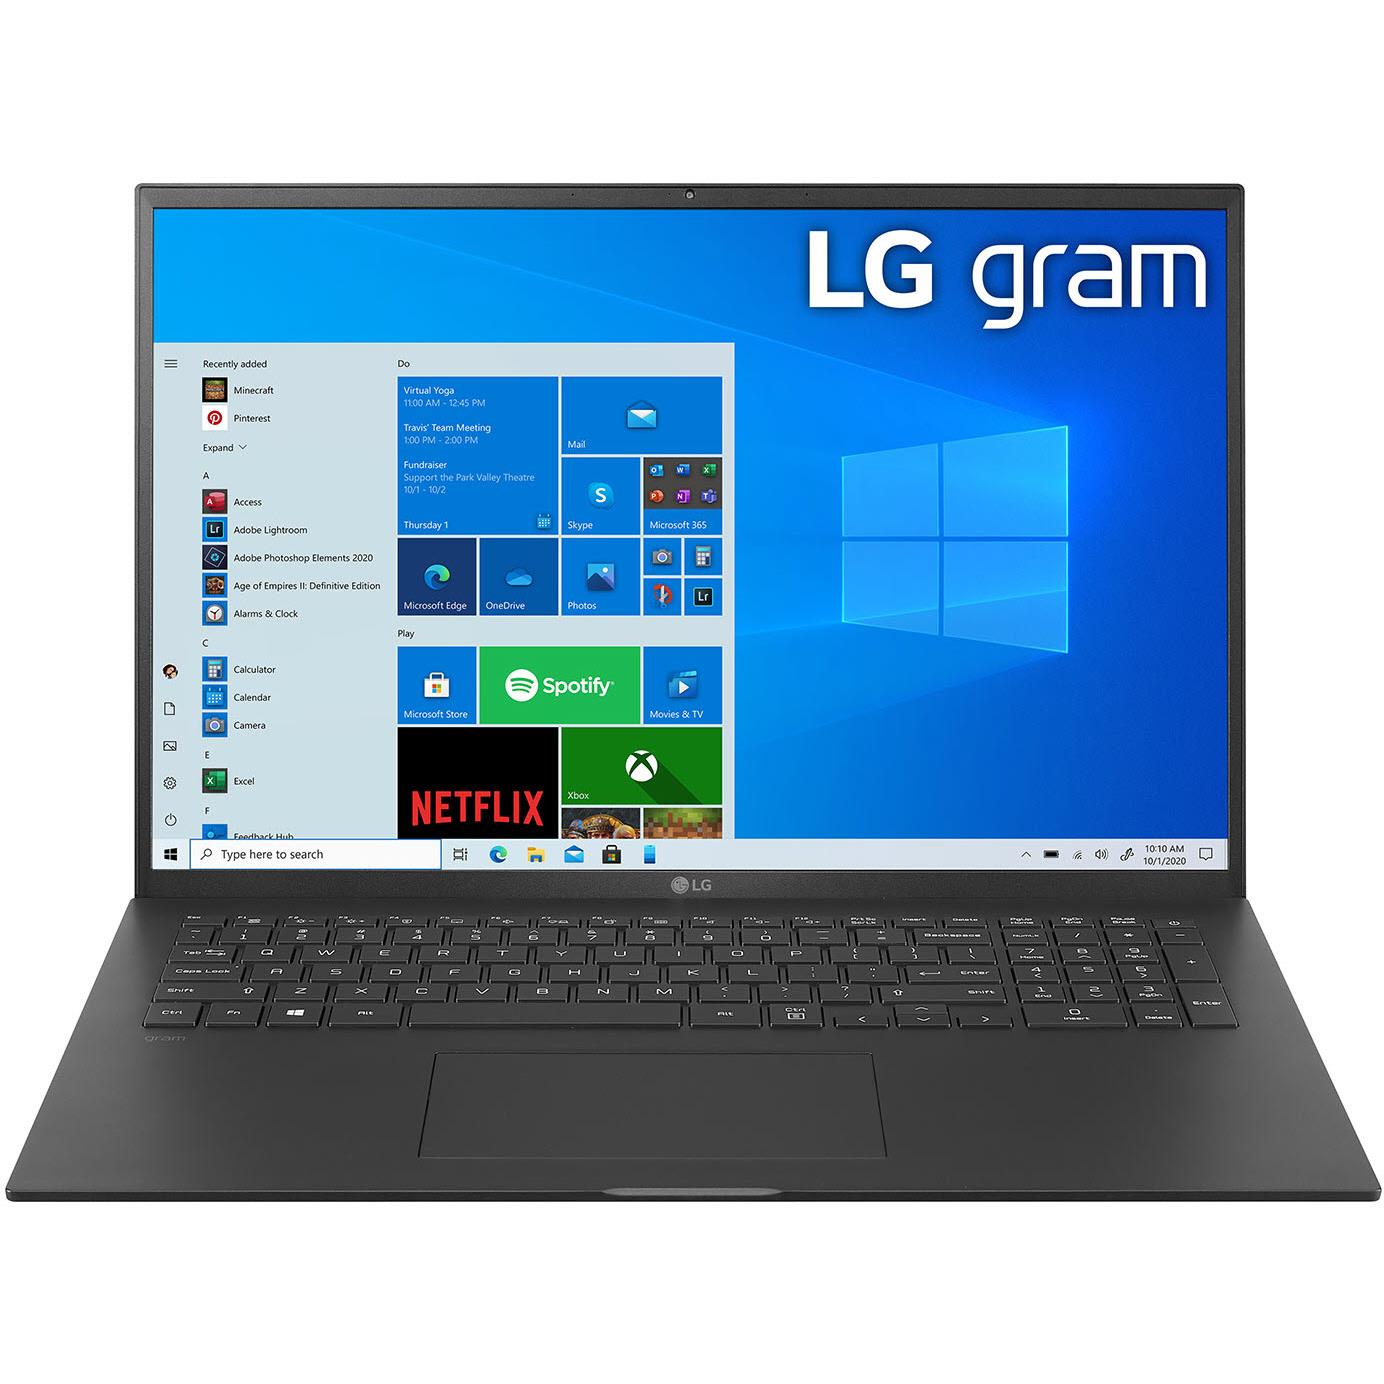 lg gram evo 17" qhd laptop (512gb) [intel i7]